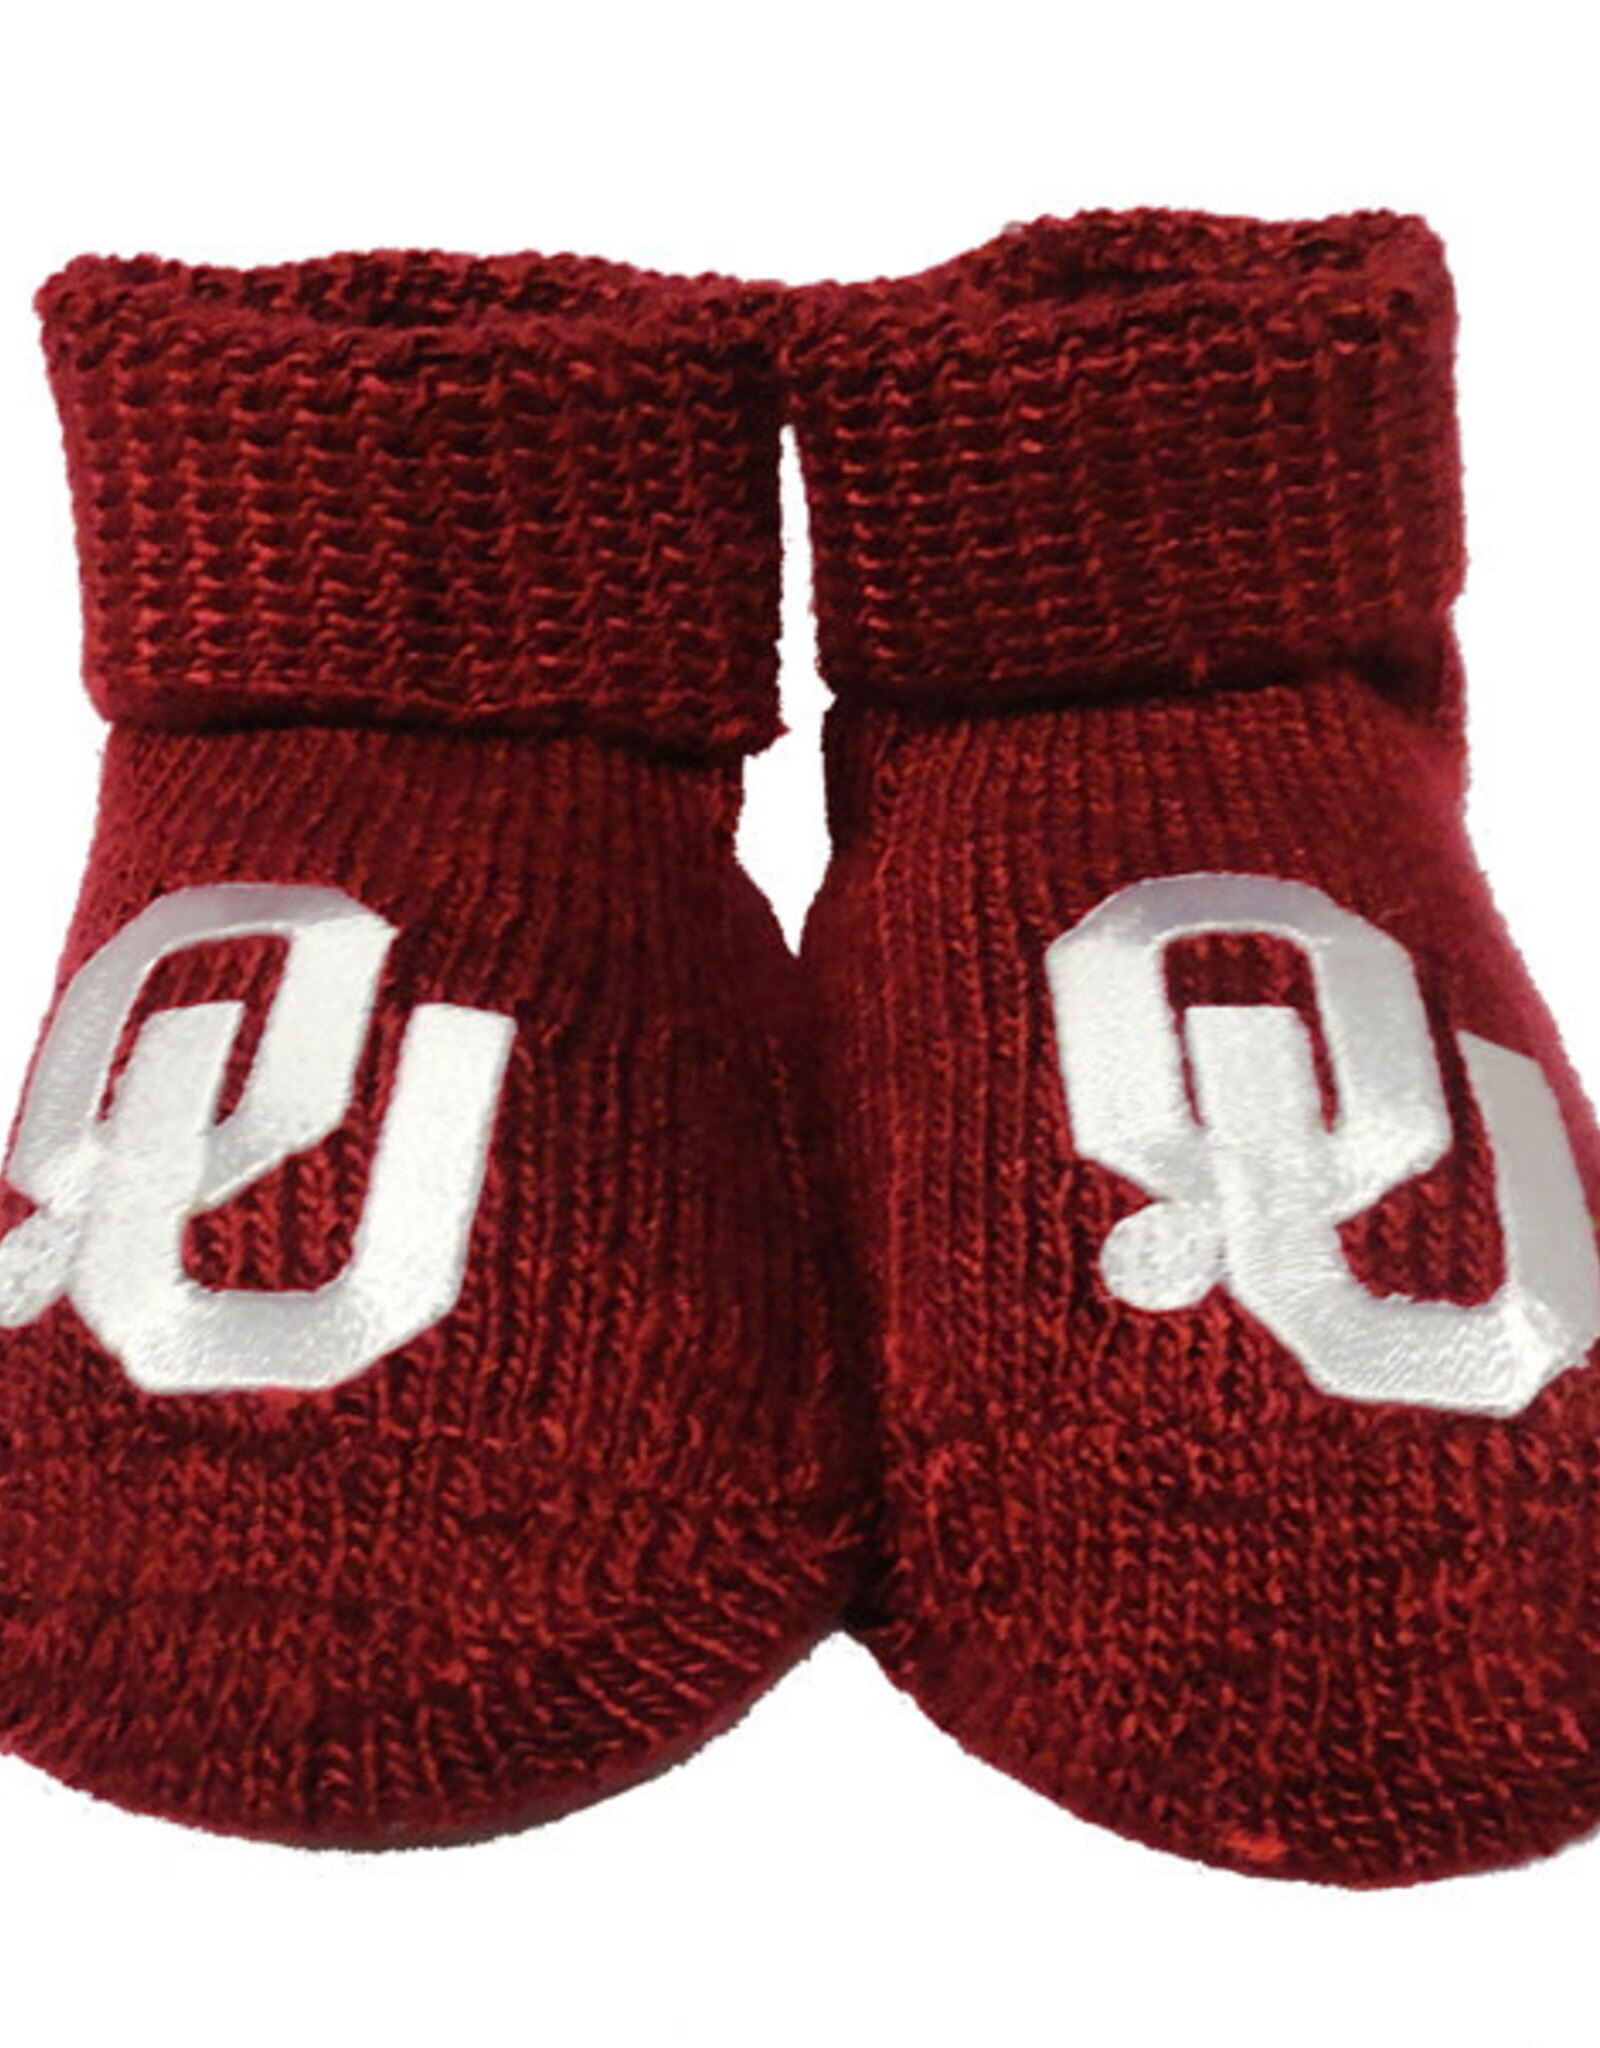 Creative Knitwear Newborn OU Crimson Booties in Gift Box